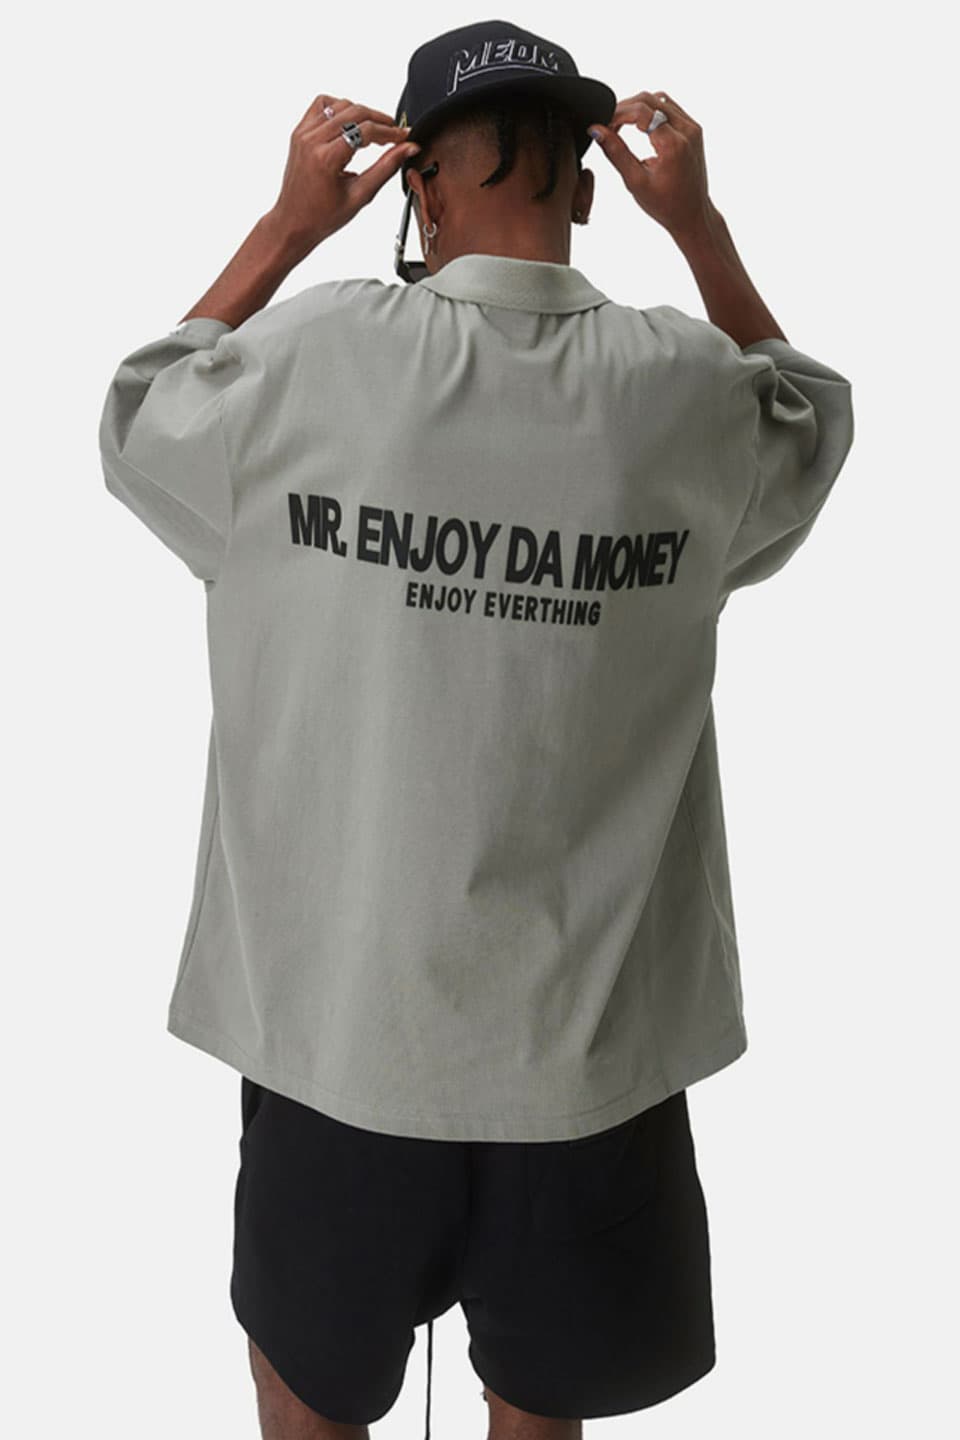 MR. ENJOY DA MONEY(ミスターエンジョイダマニー) ポロシャツ LOGO ...